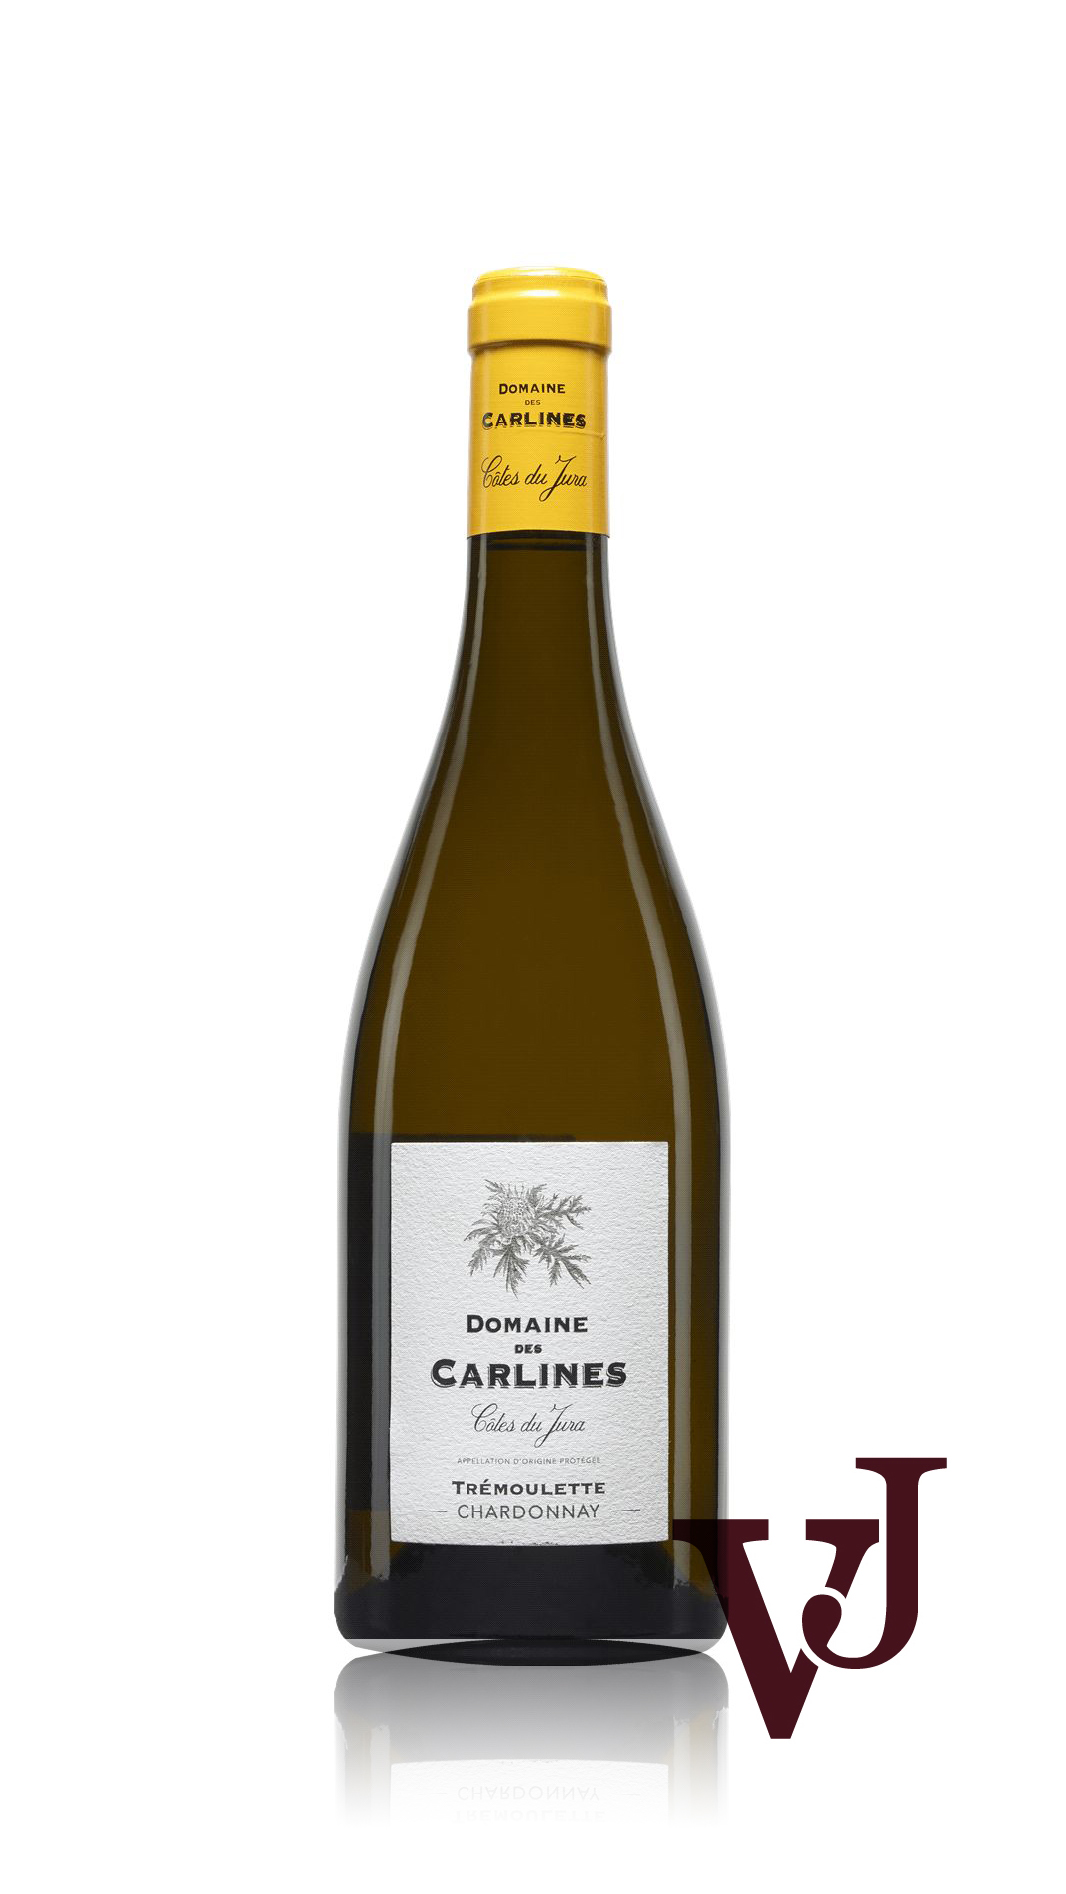 Vitt Vin - Domaine des Carlines Trémoulette Chardonnay artikel nummer 5353301 från producenten Domaine des Carlines från området Frankrike - Vinjournalen.se